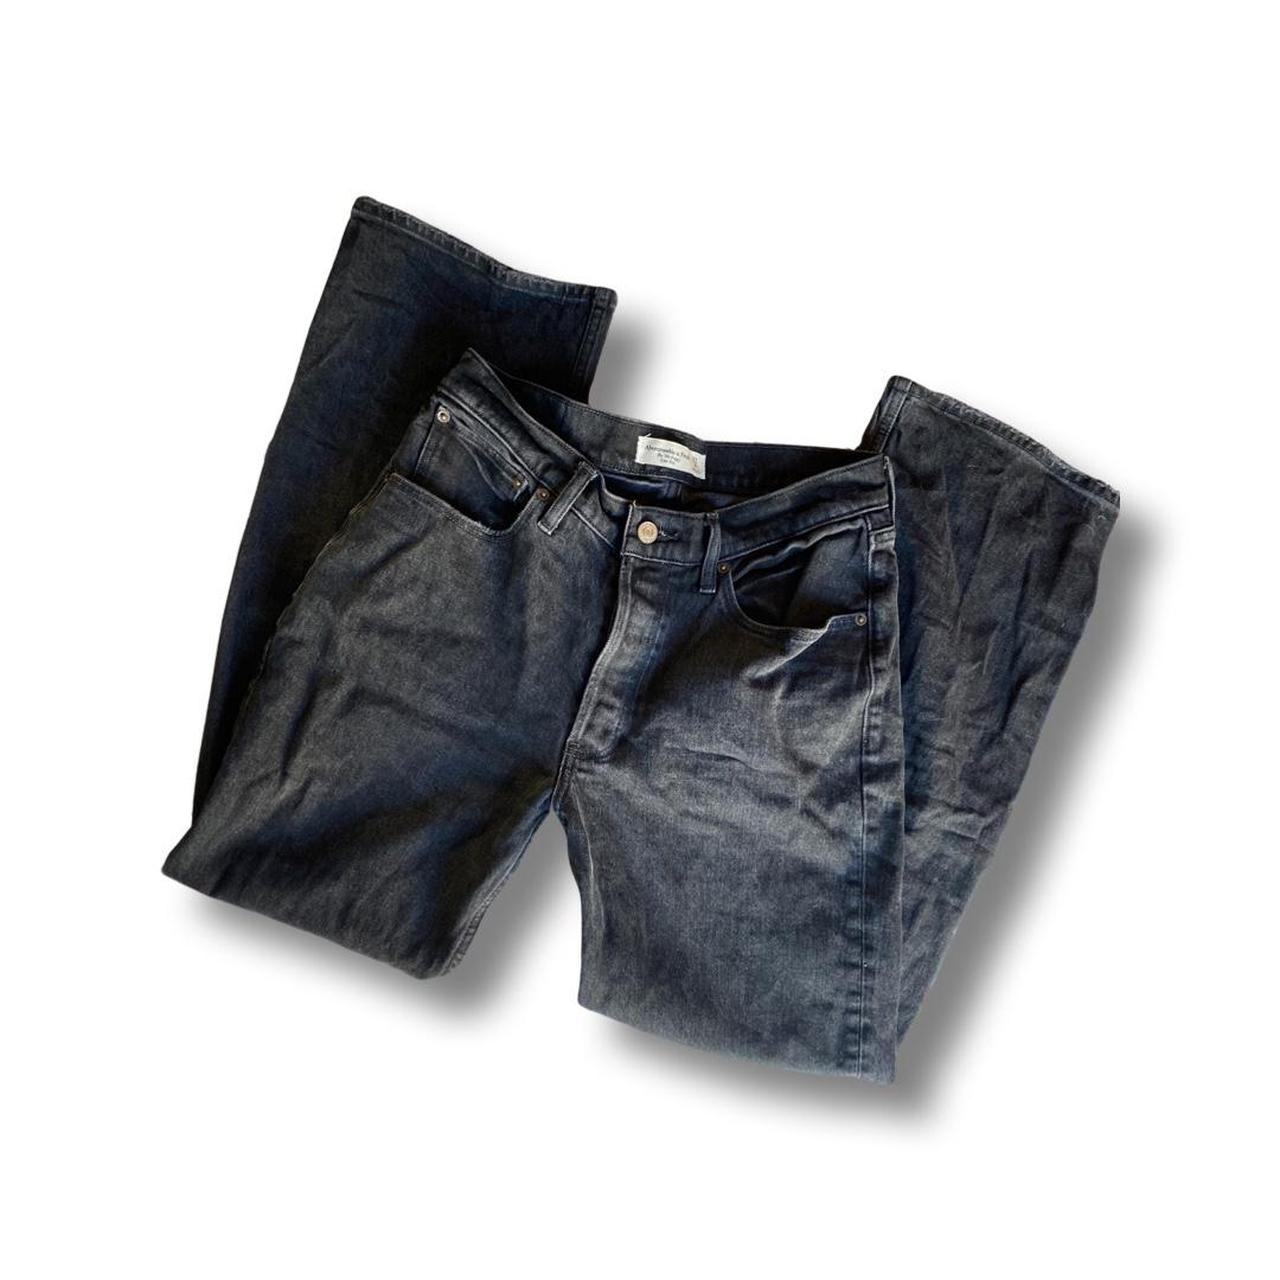 Abercrombie & Fitch Women's Black Jeans